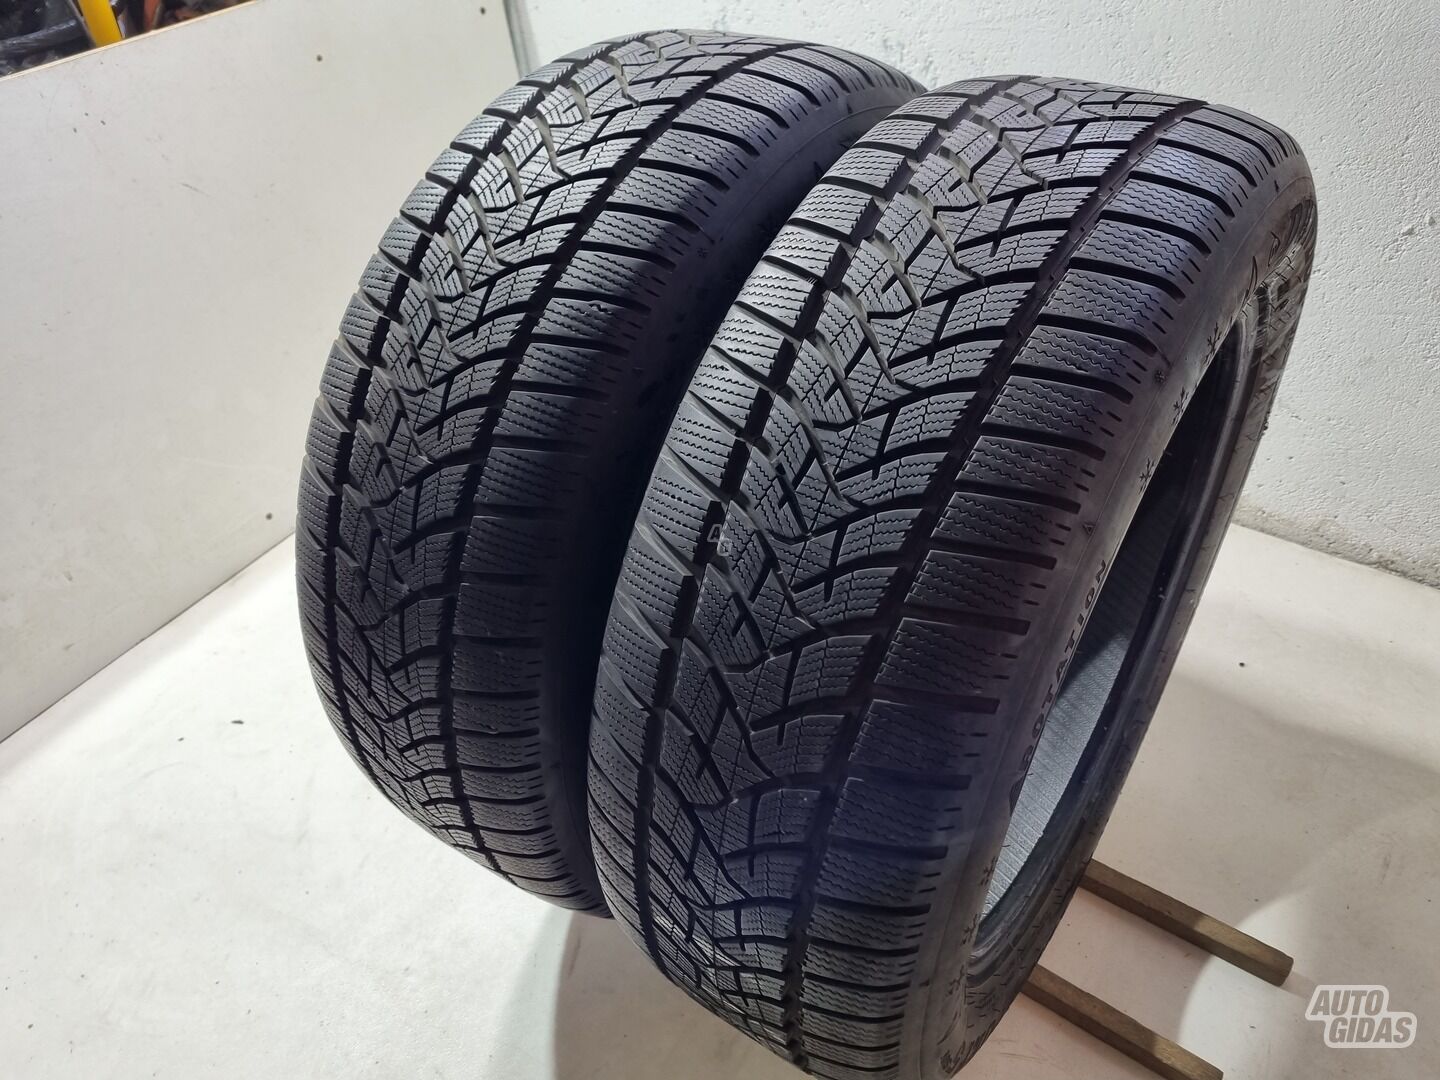 Dunlop 7-8mm, 2018m R19 universal tyres passanger car